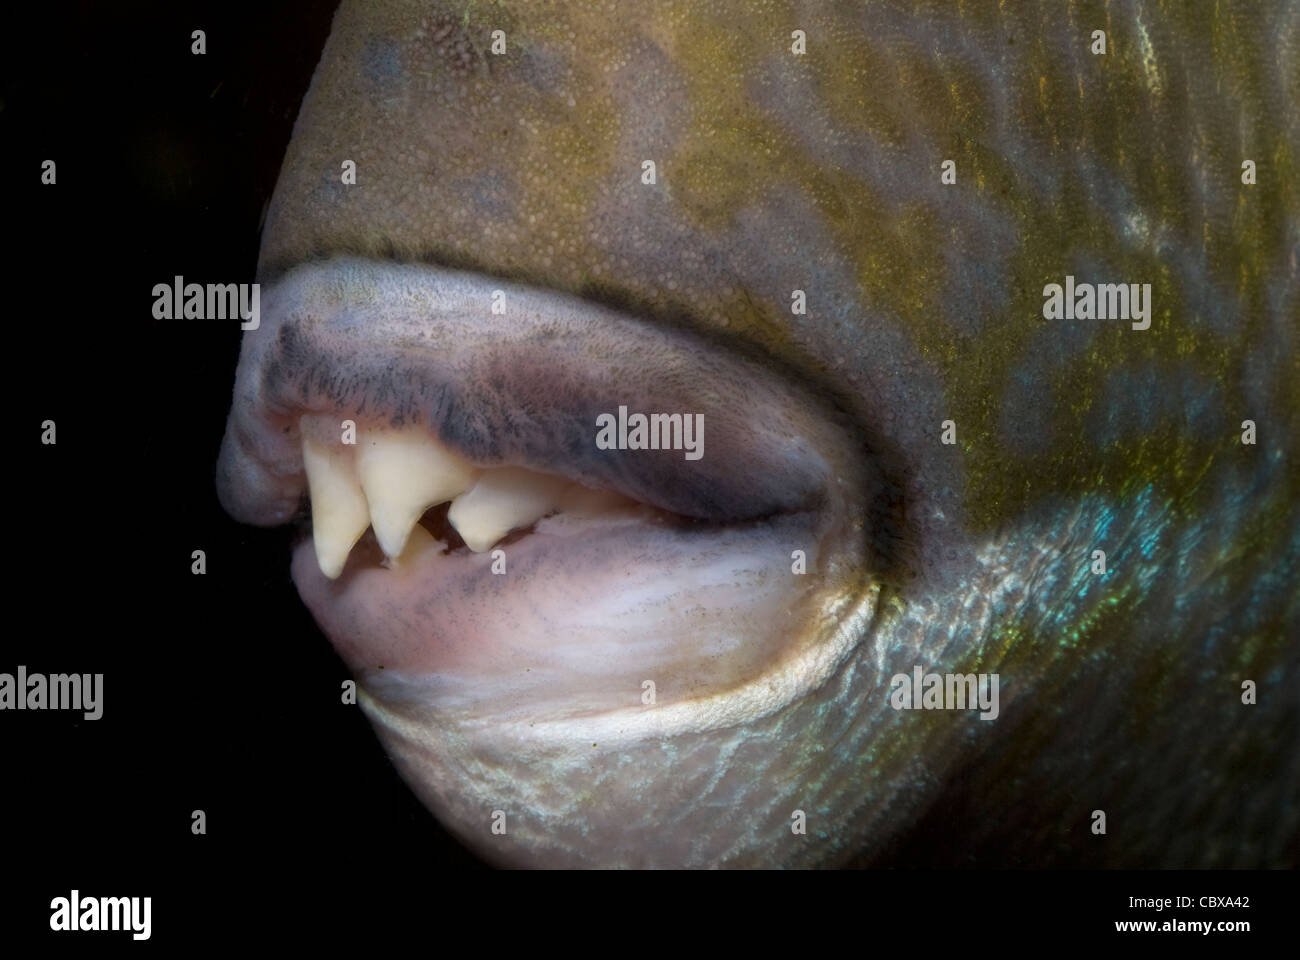 Mouth of Grey triggerfish Balistes capriscus, Balistidae Mediterranean Sea Stock Photo